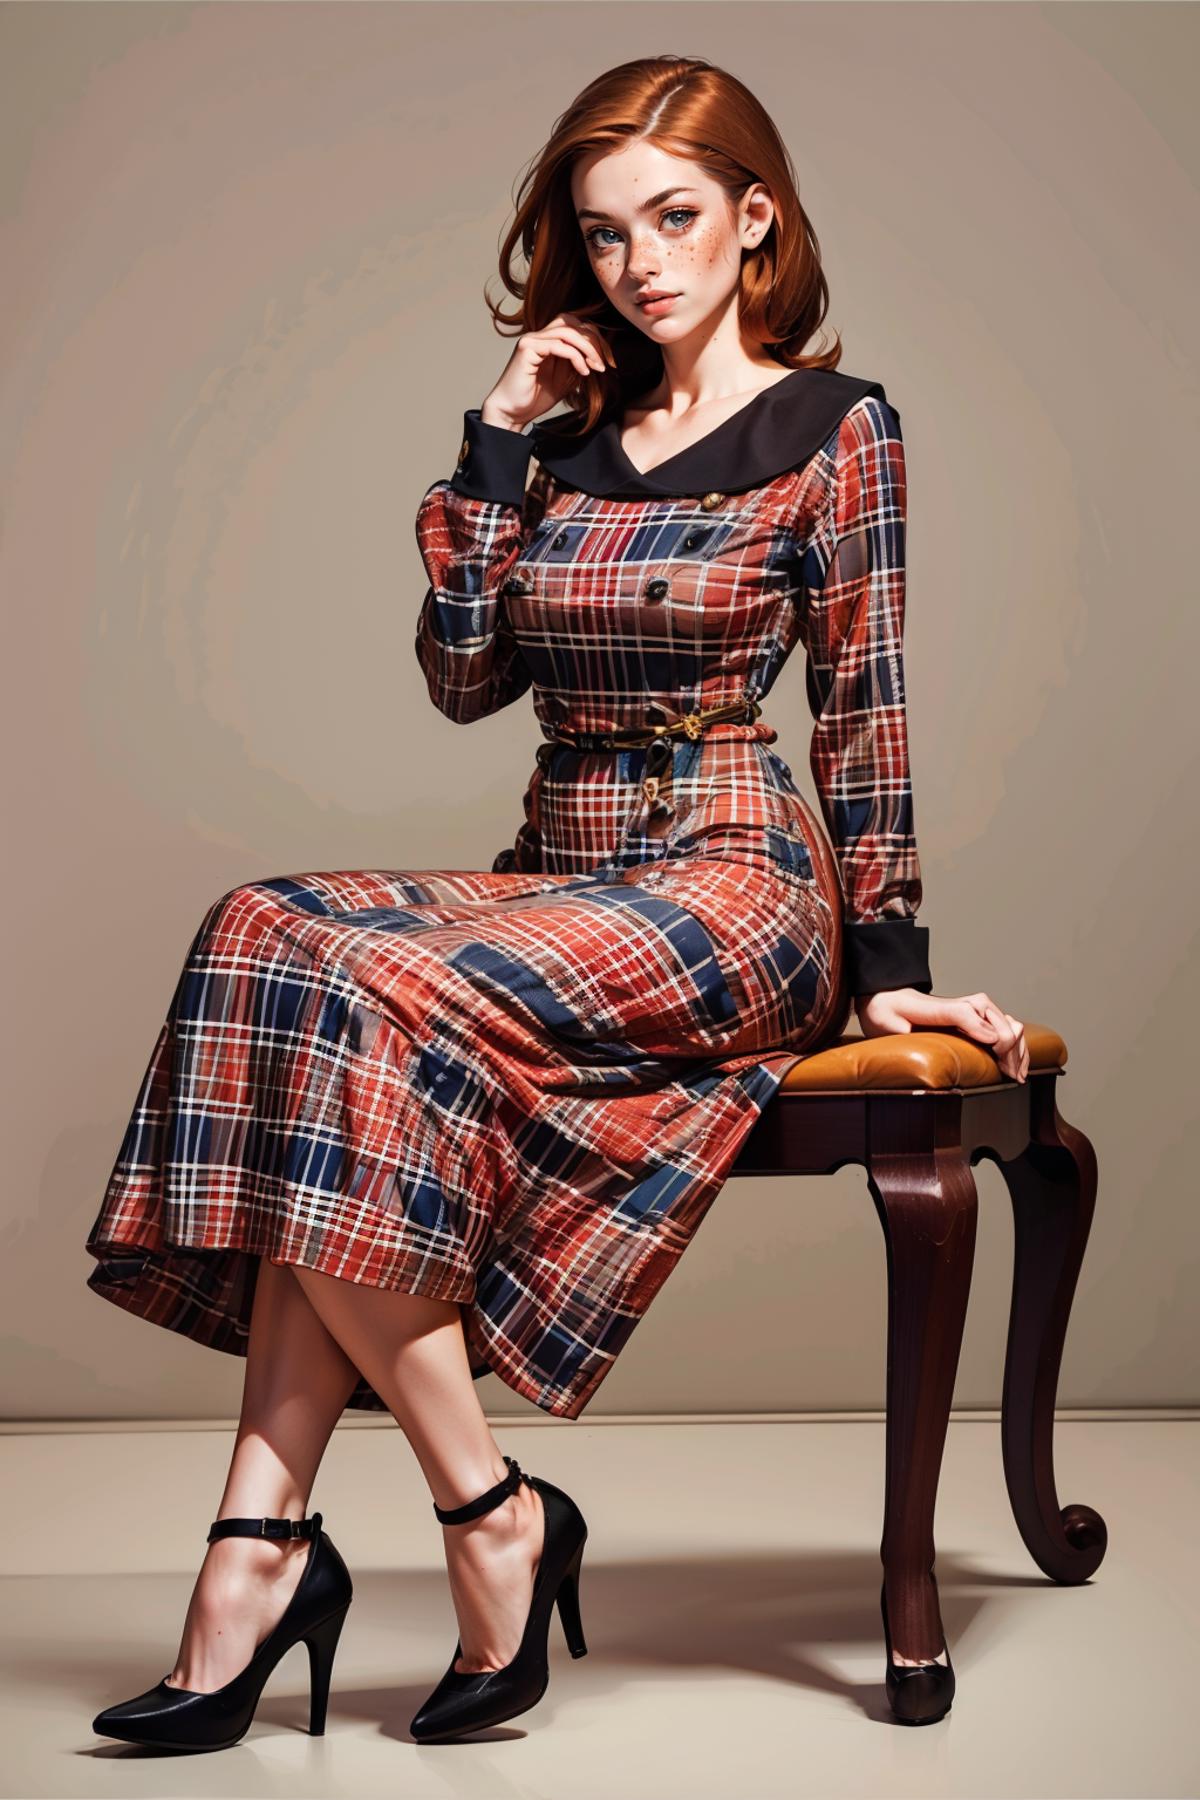 Vintage Plaid Dress image by freckledvixon